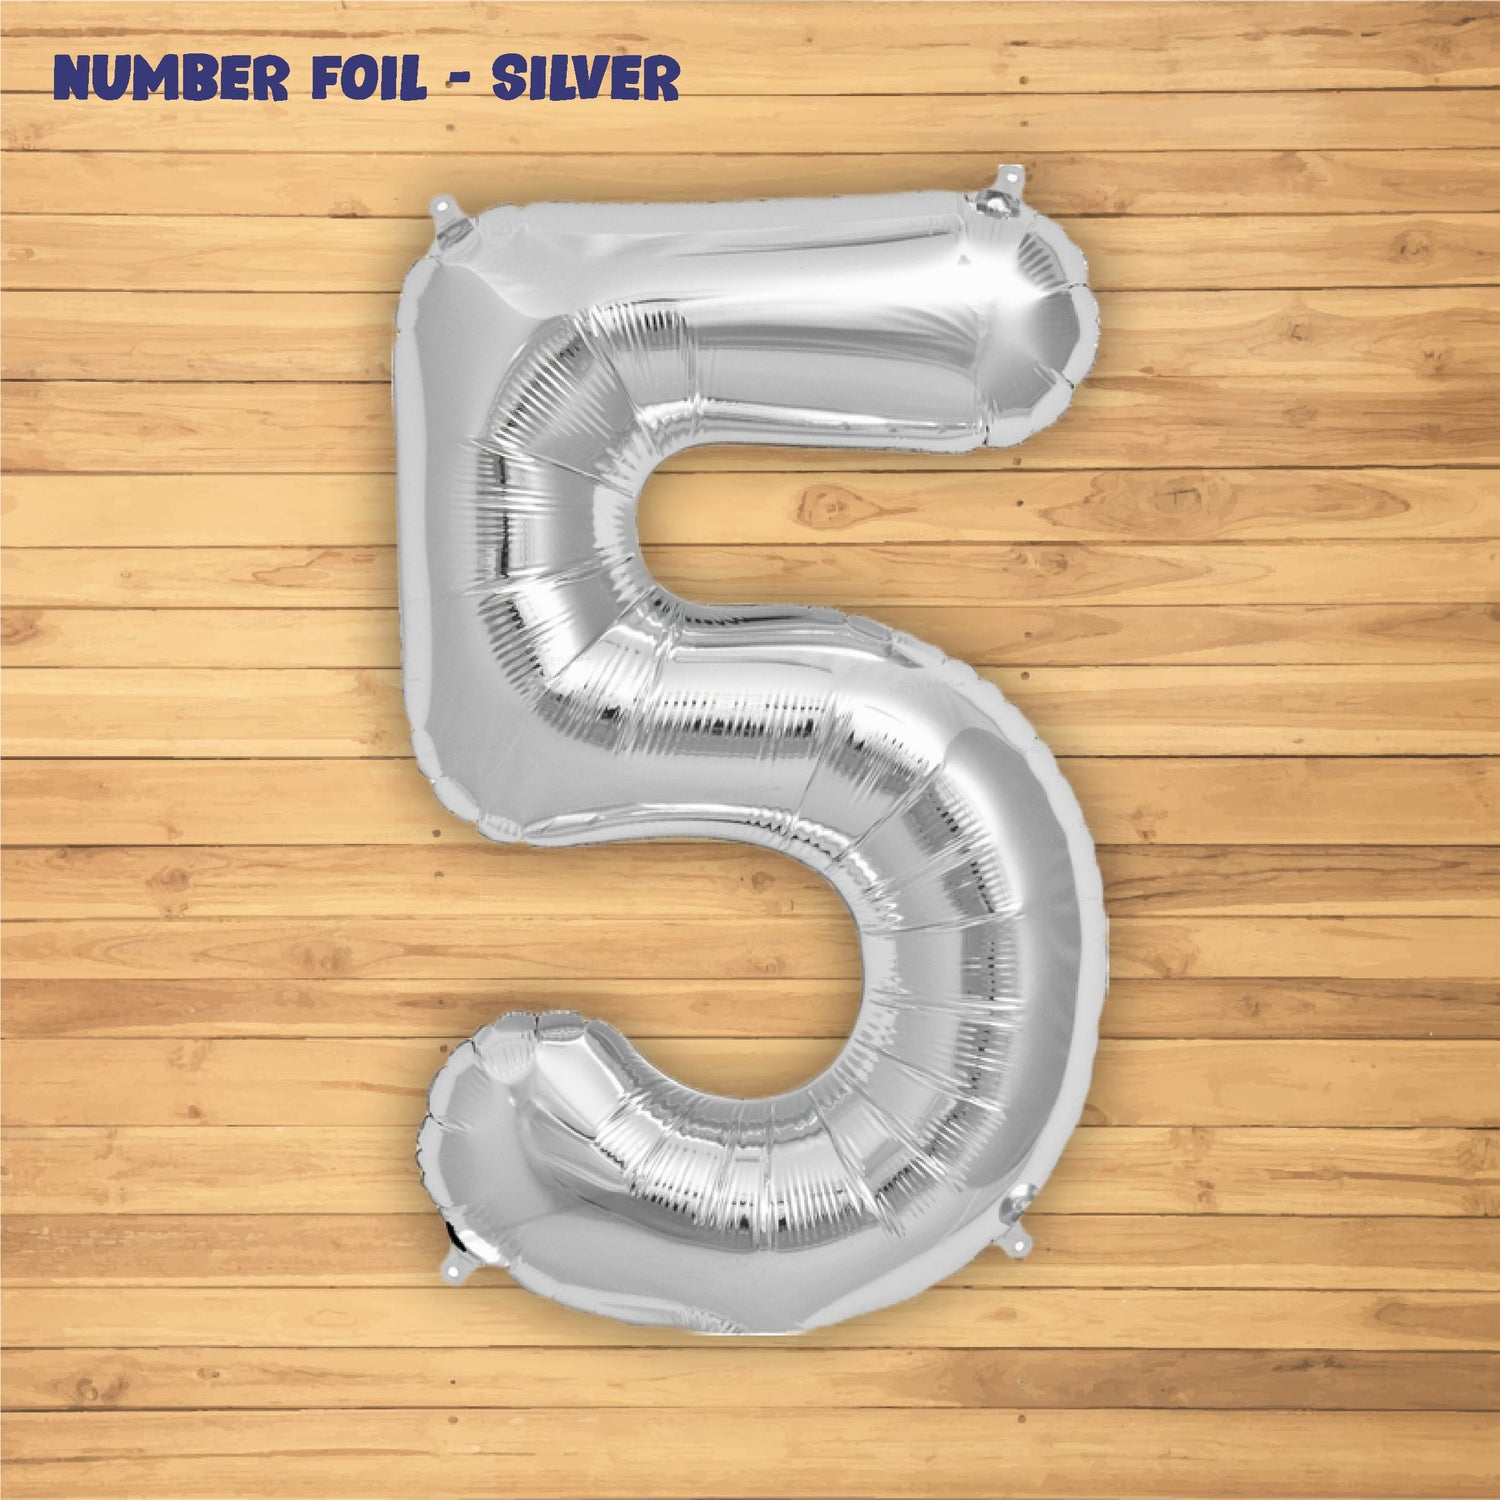 Number 5 Premium Silver Foil Balloon